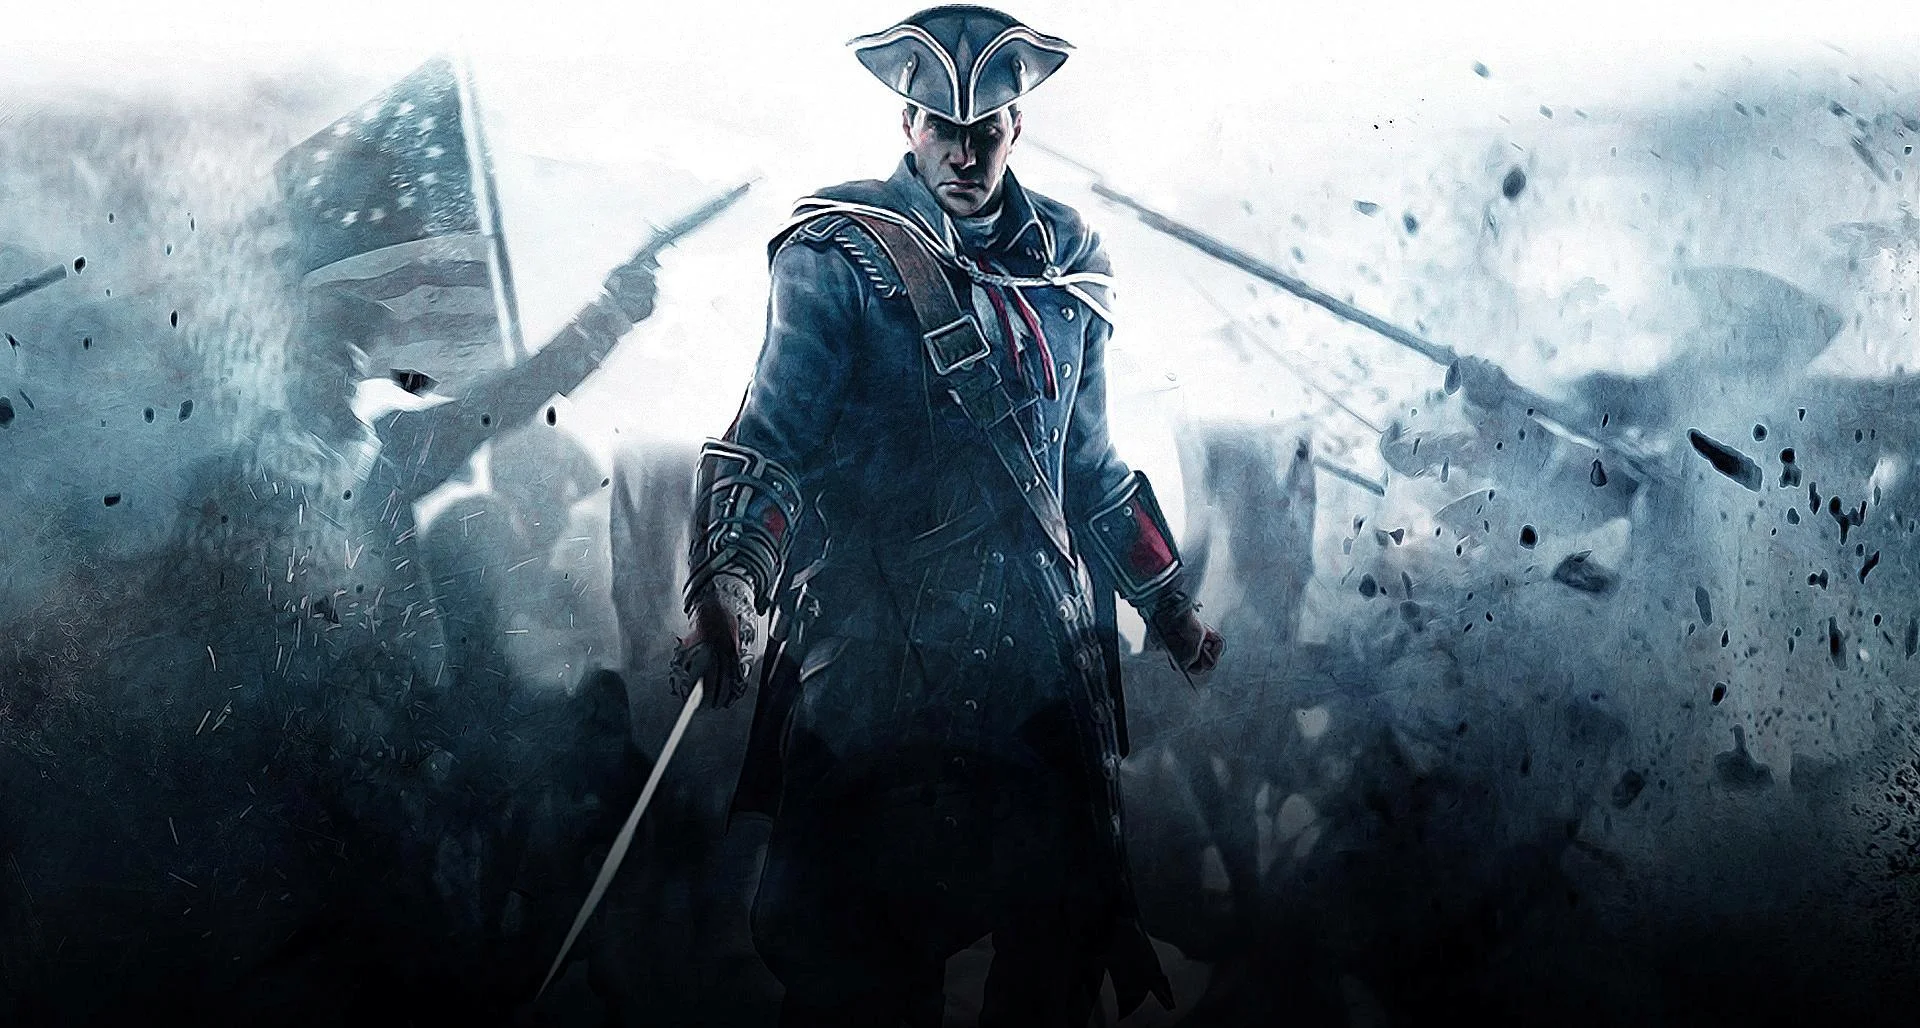 Гифка дня: максимальная десинхронизация в Assassinʼs Creed III Remastered - фото 1